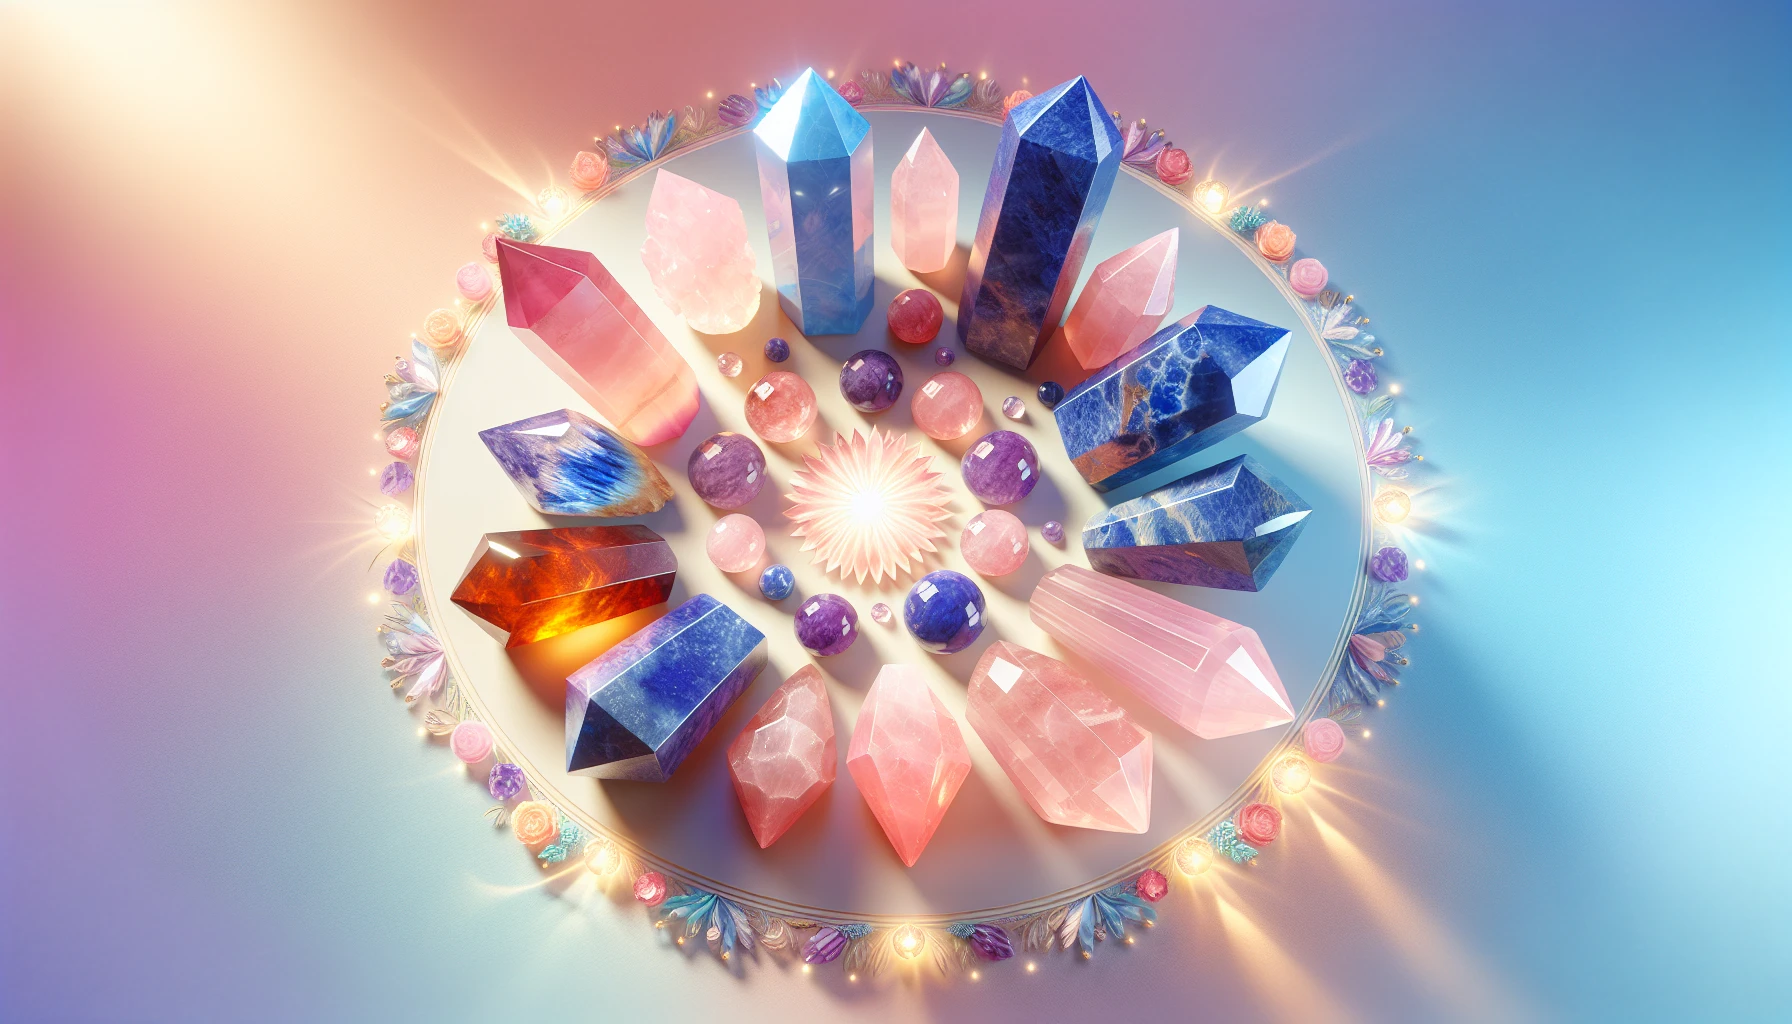 Illustration of various crystals like Rose Quartz, Lapis Lazuli, and Amethyst